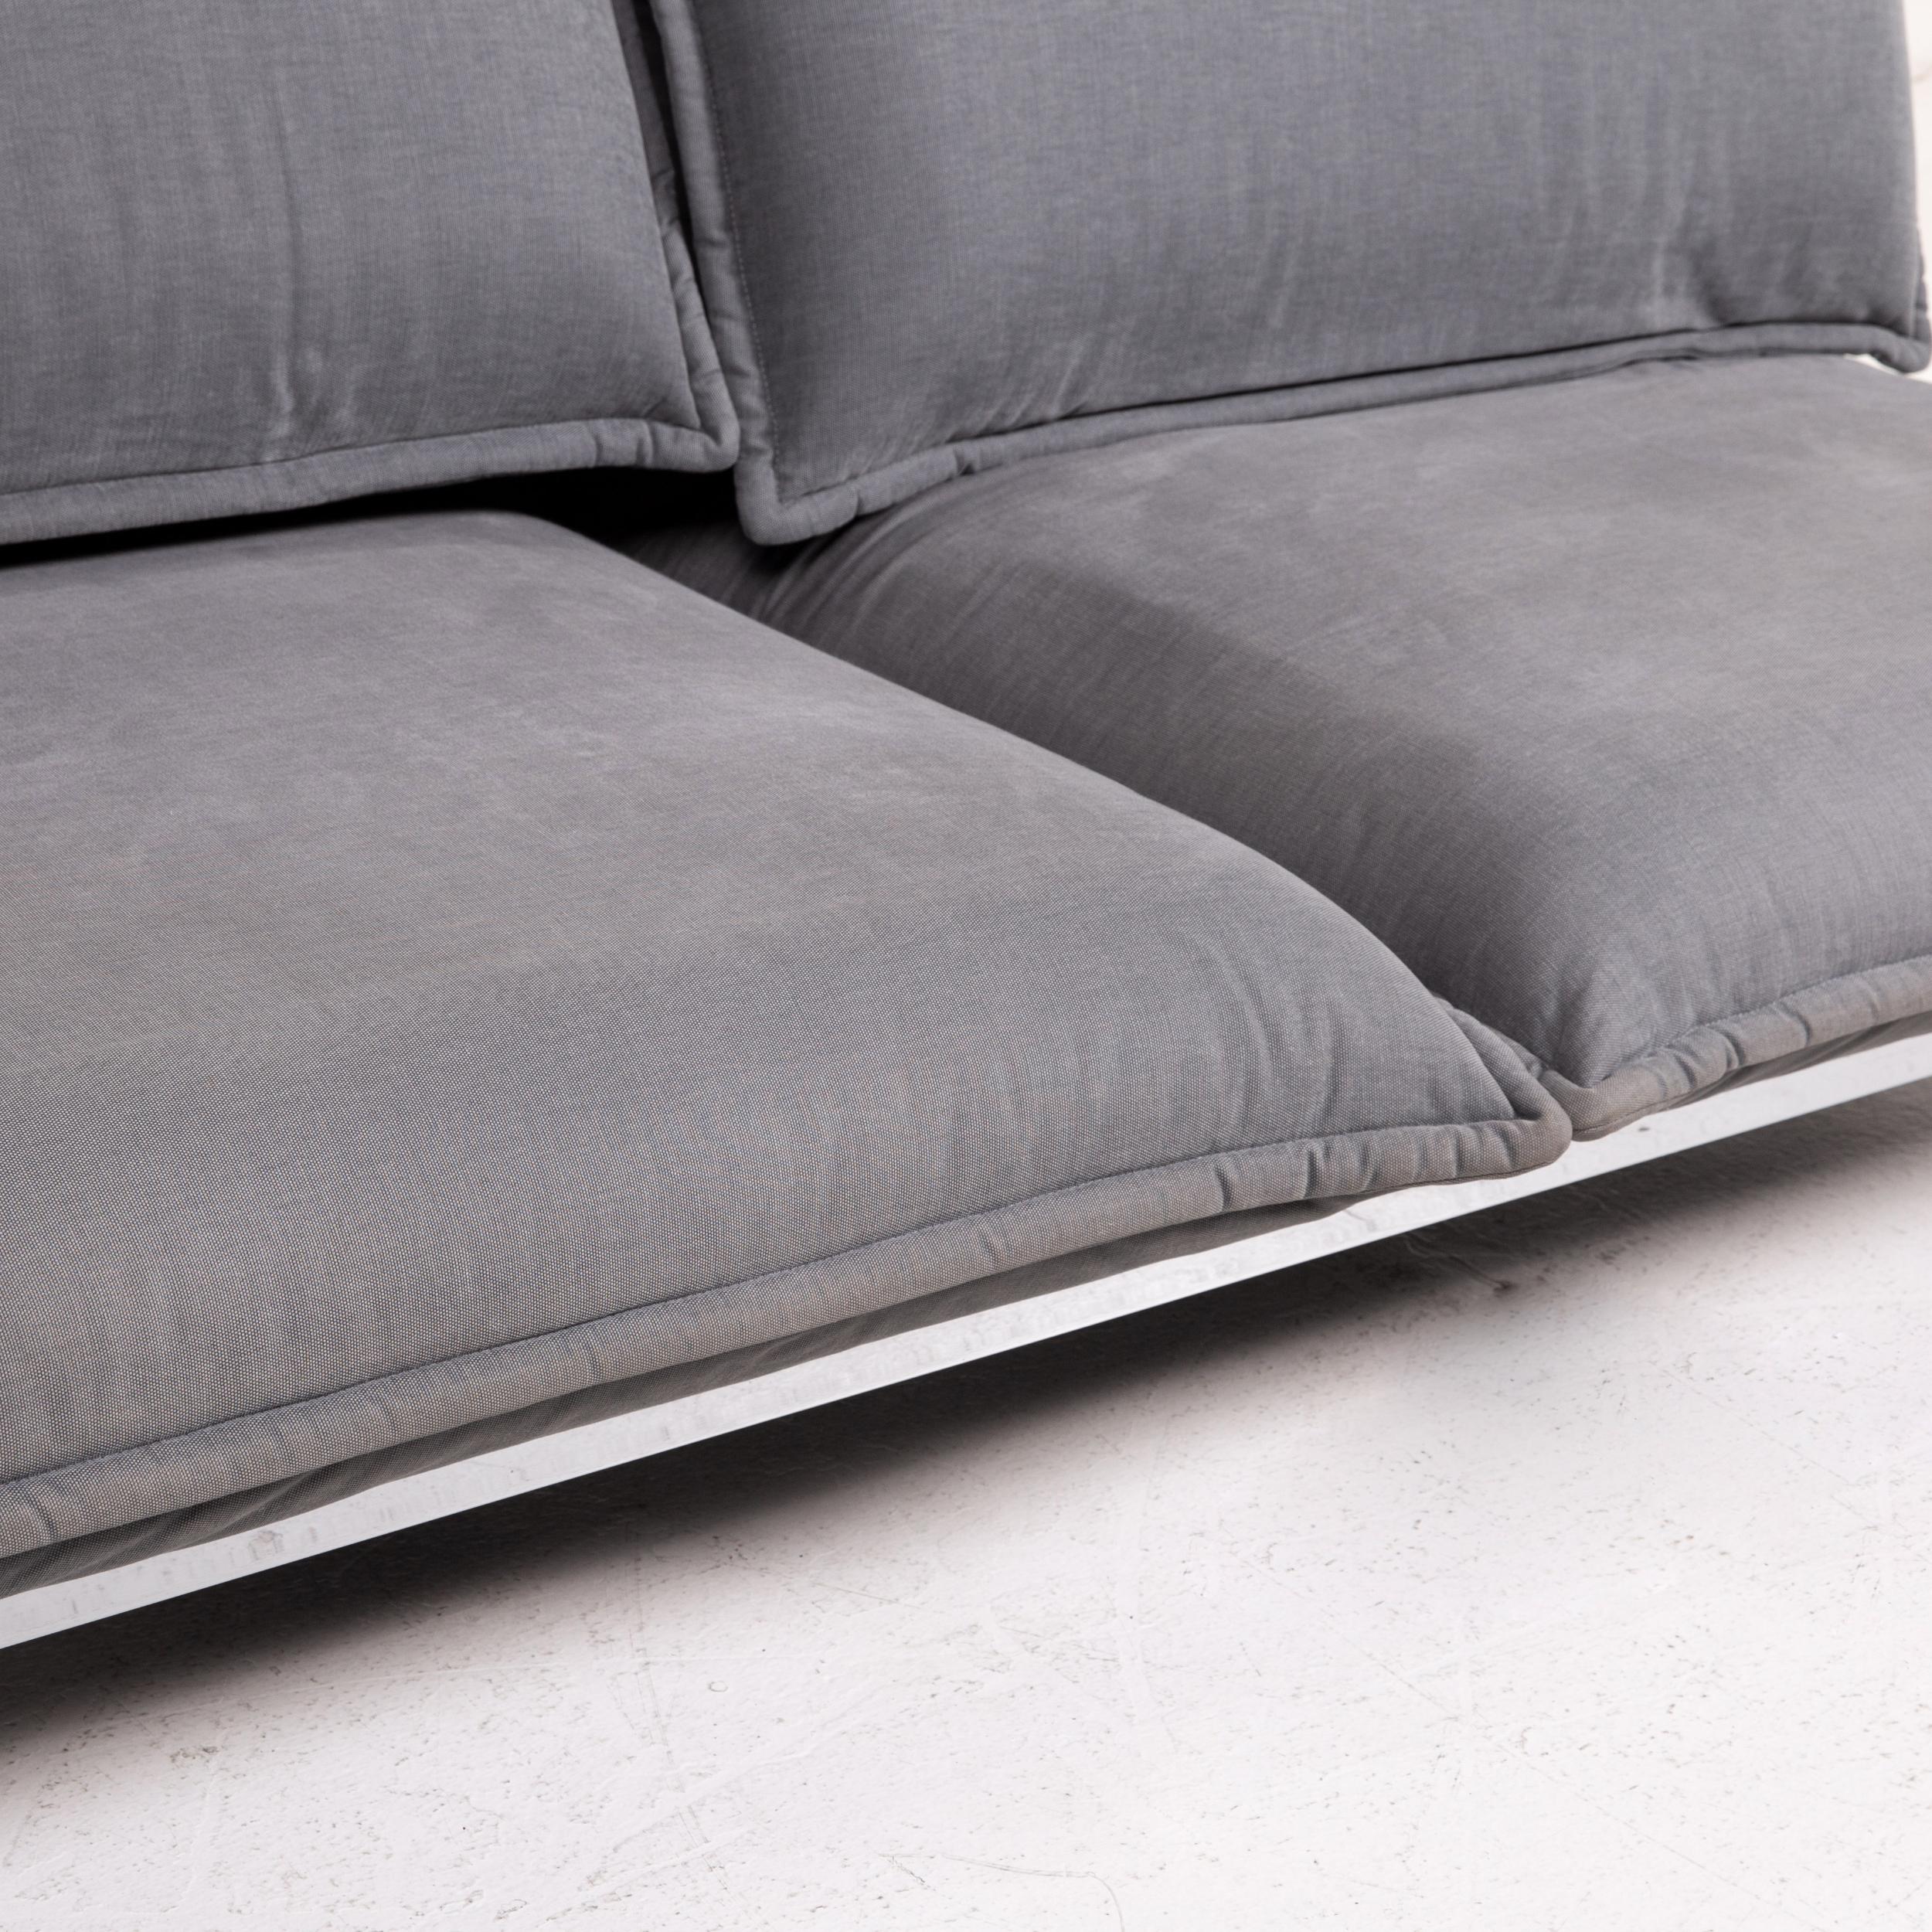 Modern Rolf Benz Nova Fabric Sofa Bed Gray Gray Blue Two-Seater Function Sleeping